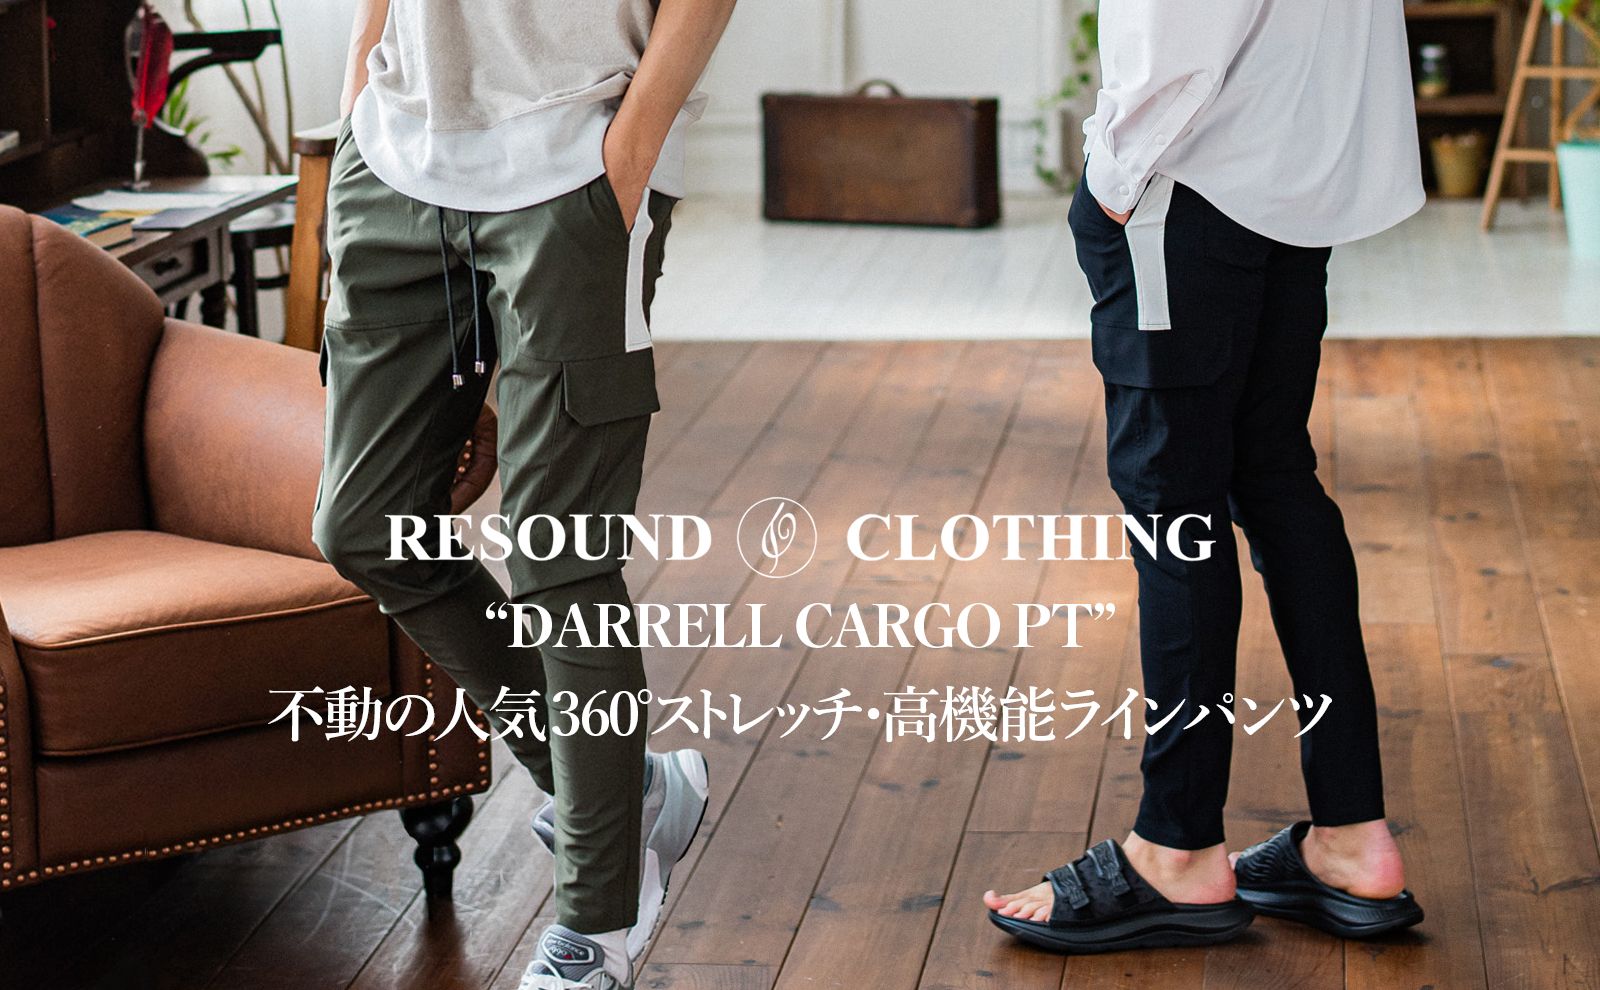 DARRELL CARGO PT / RESOUND CLOTHING